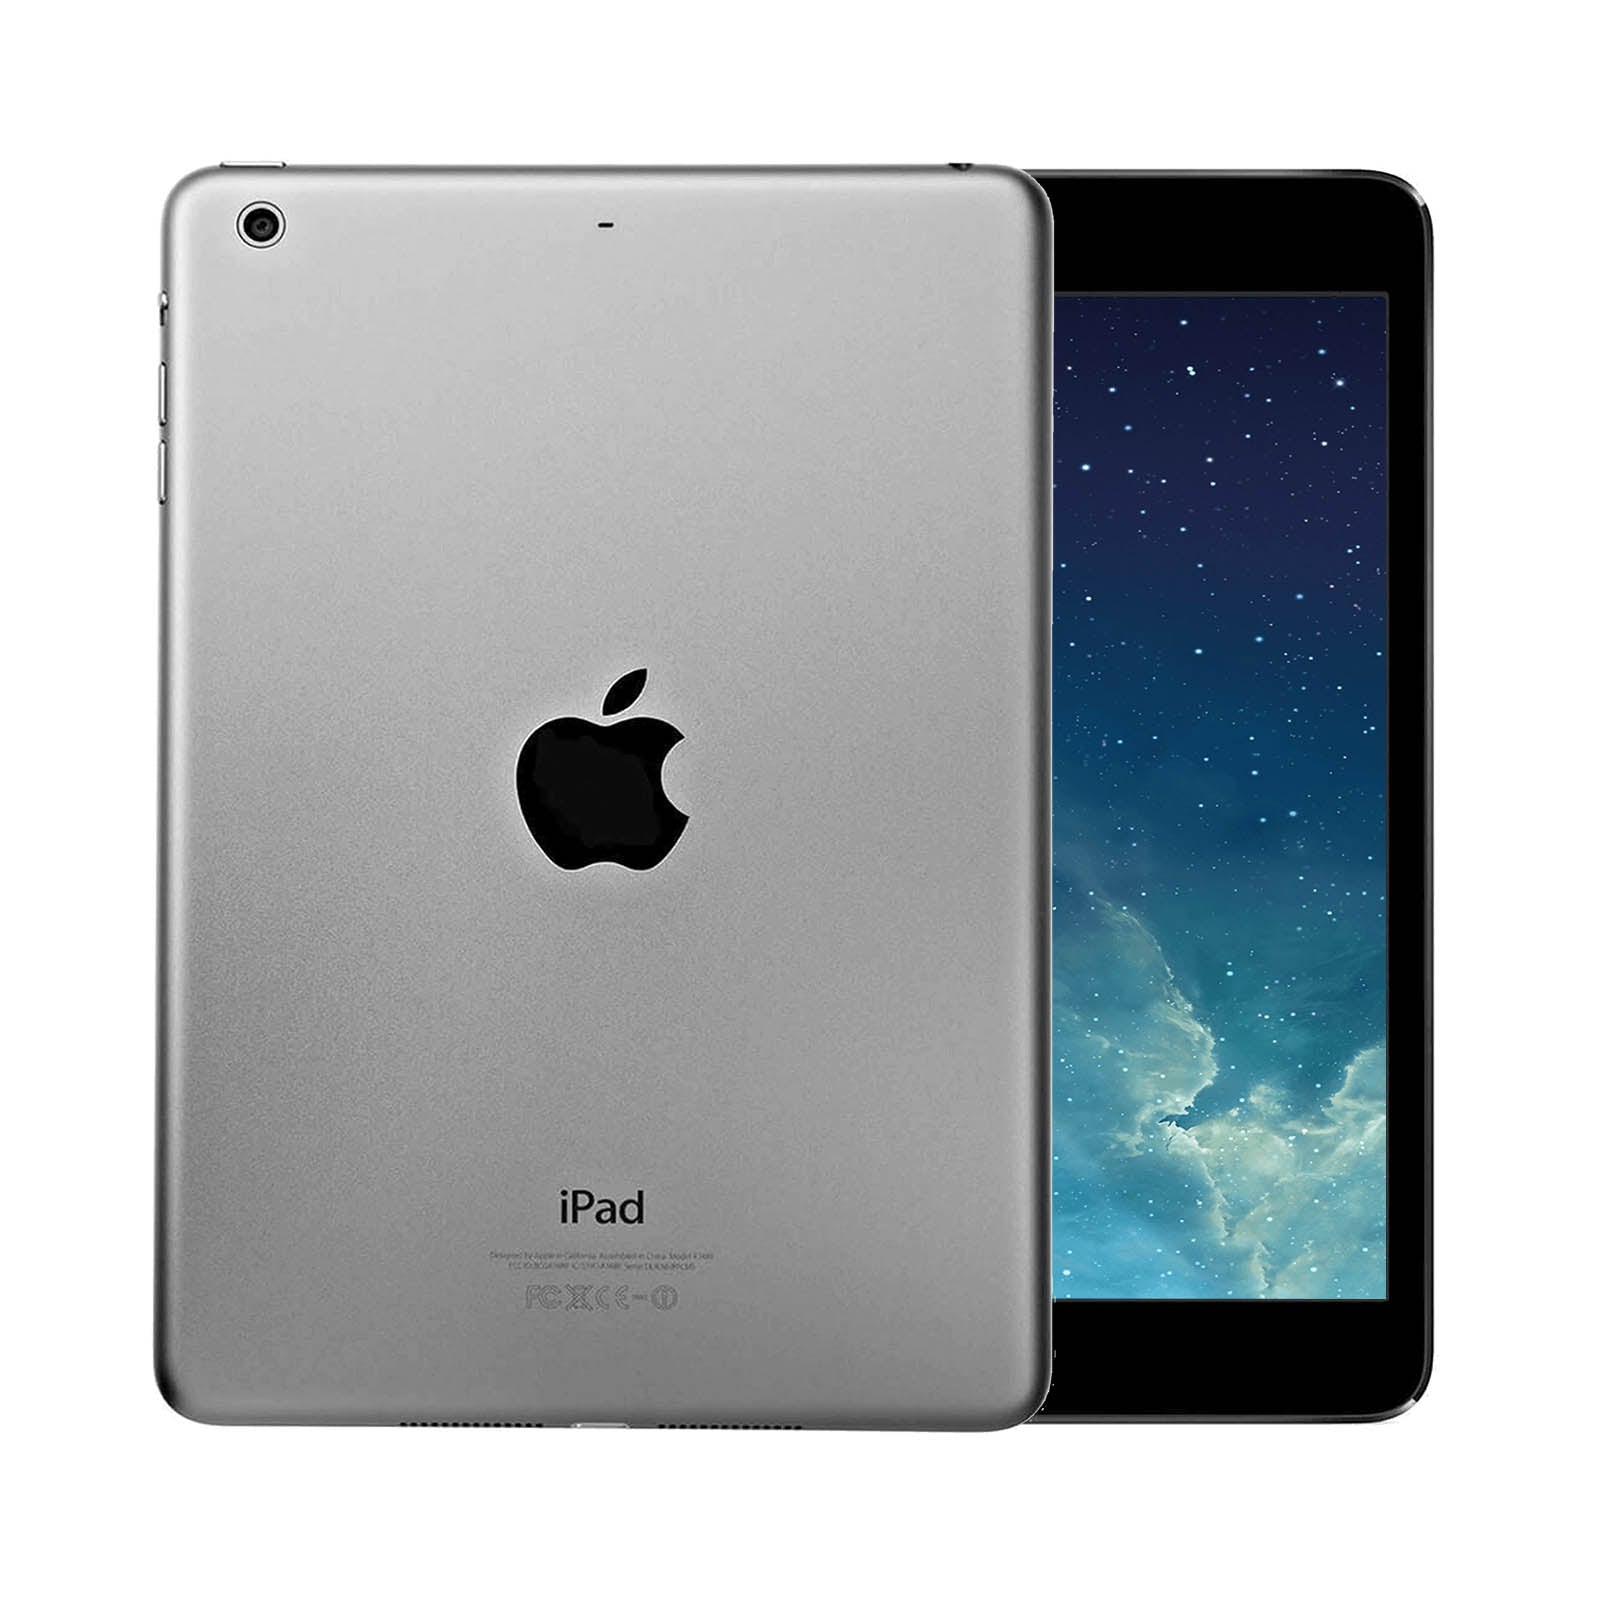 iPad Air 16GB WiFi Space Grey Good-Unlocked